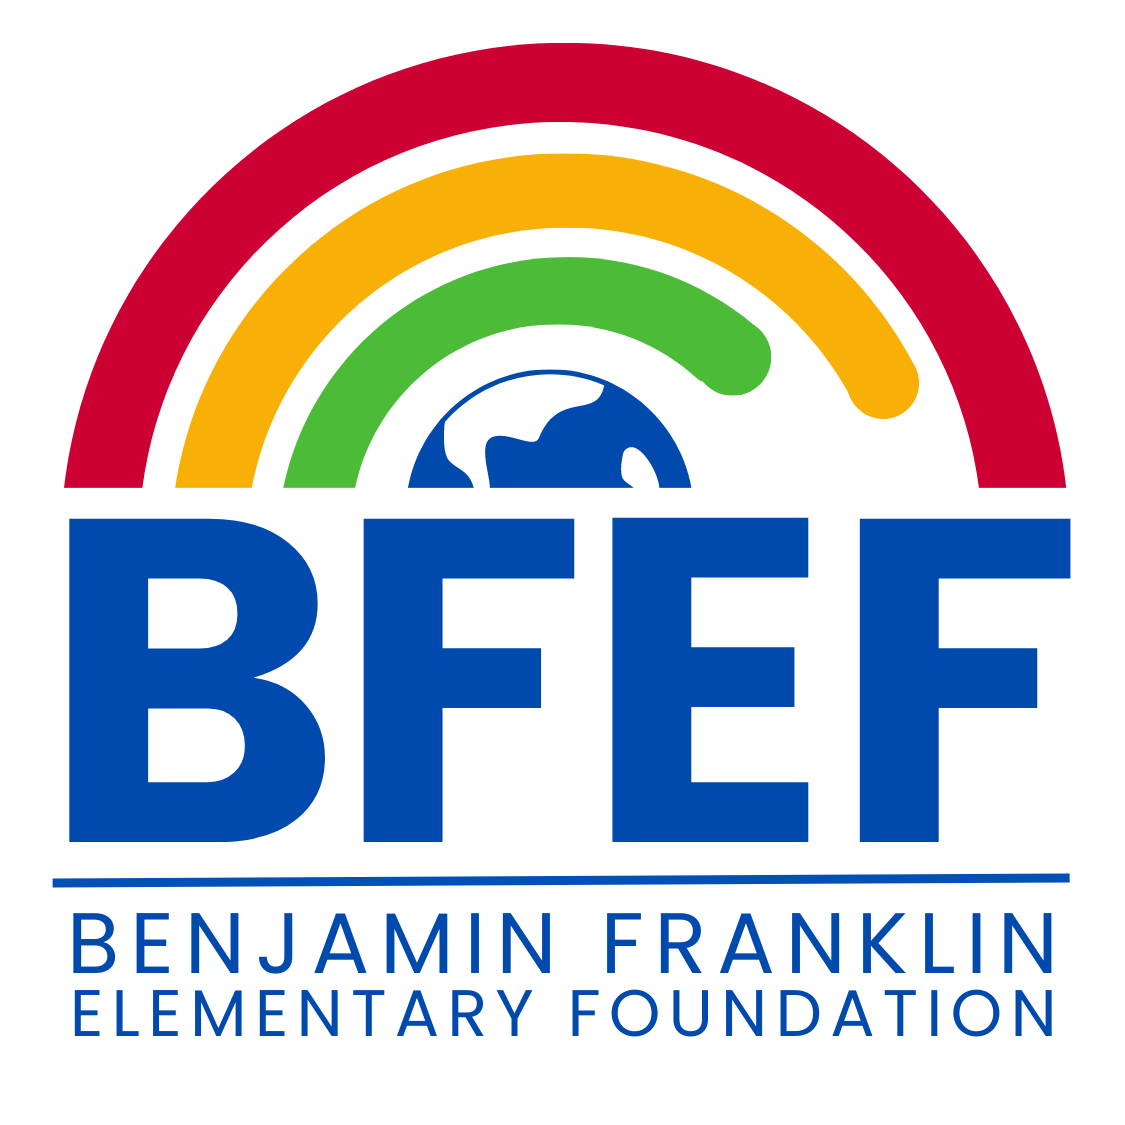 The Benjamin Franklin Elementary Foundation